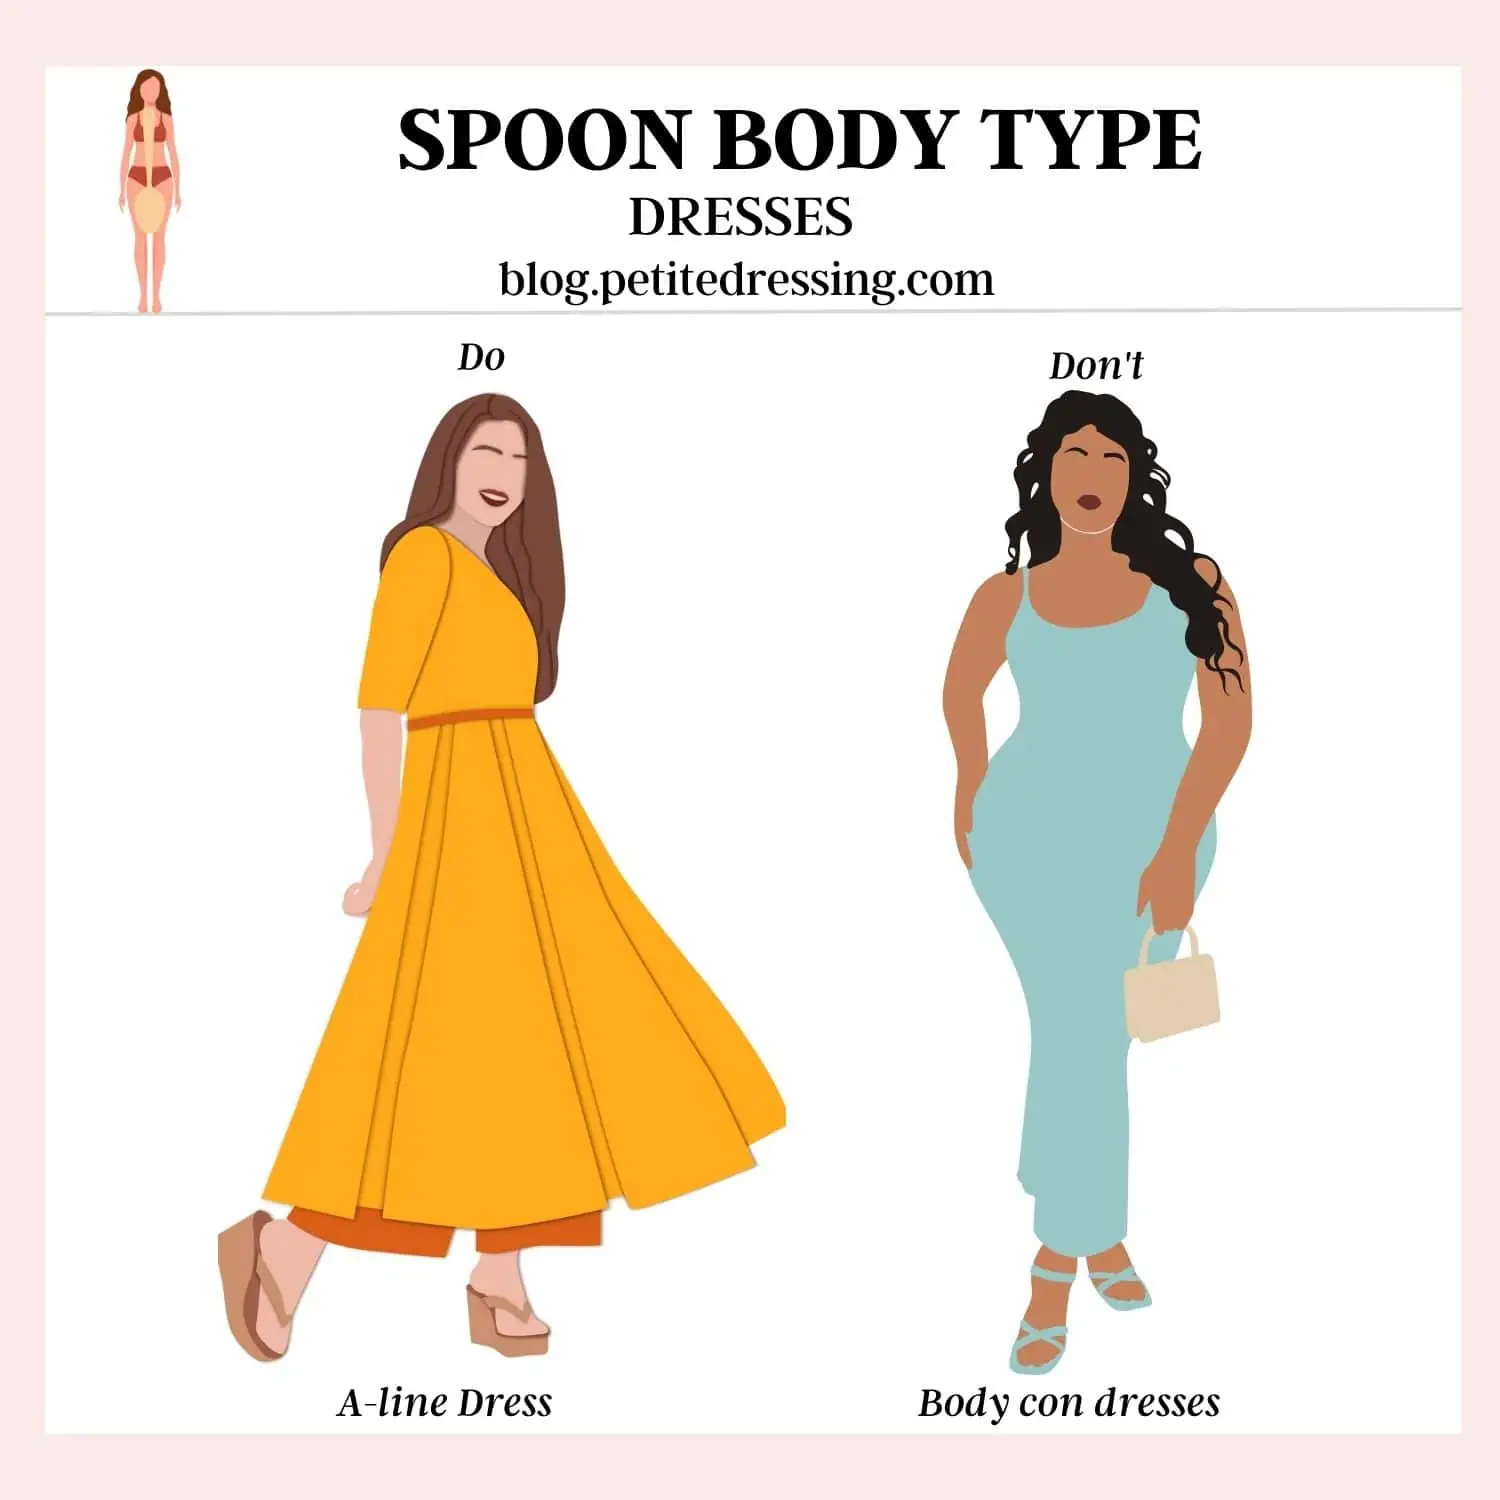 How to Dress for a Spoon Body Shape : u/mihir_webix